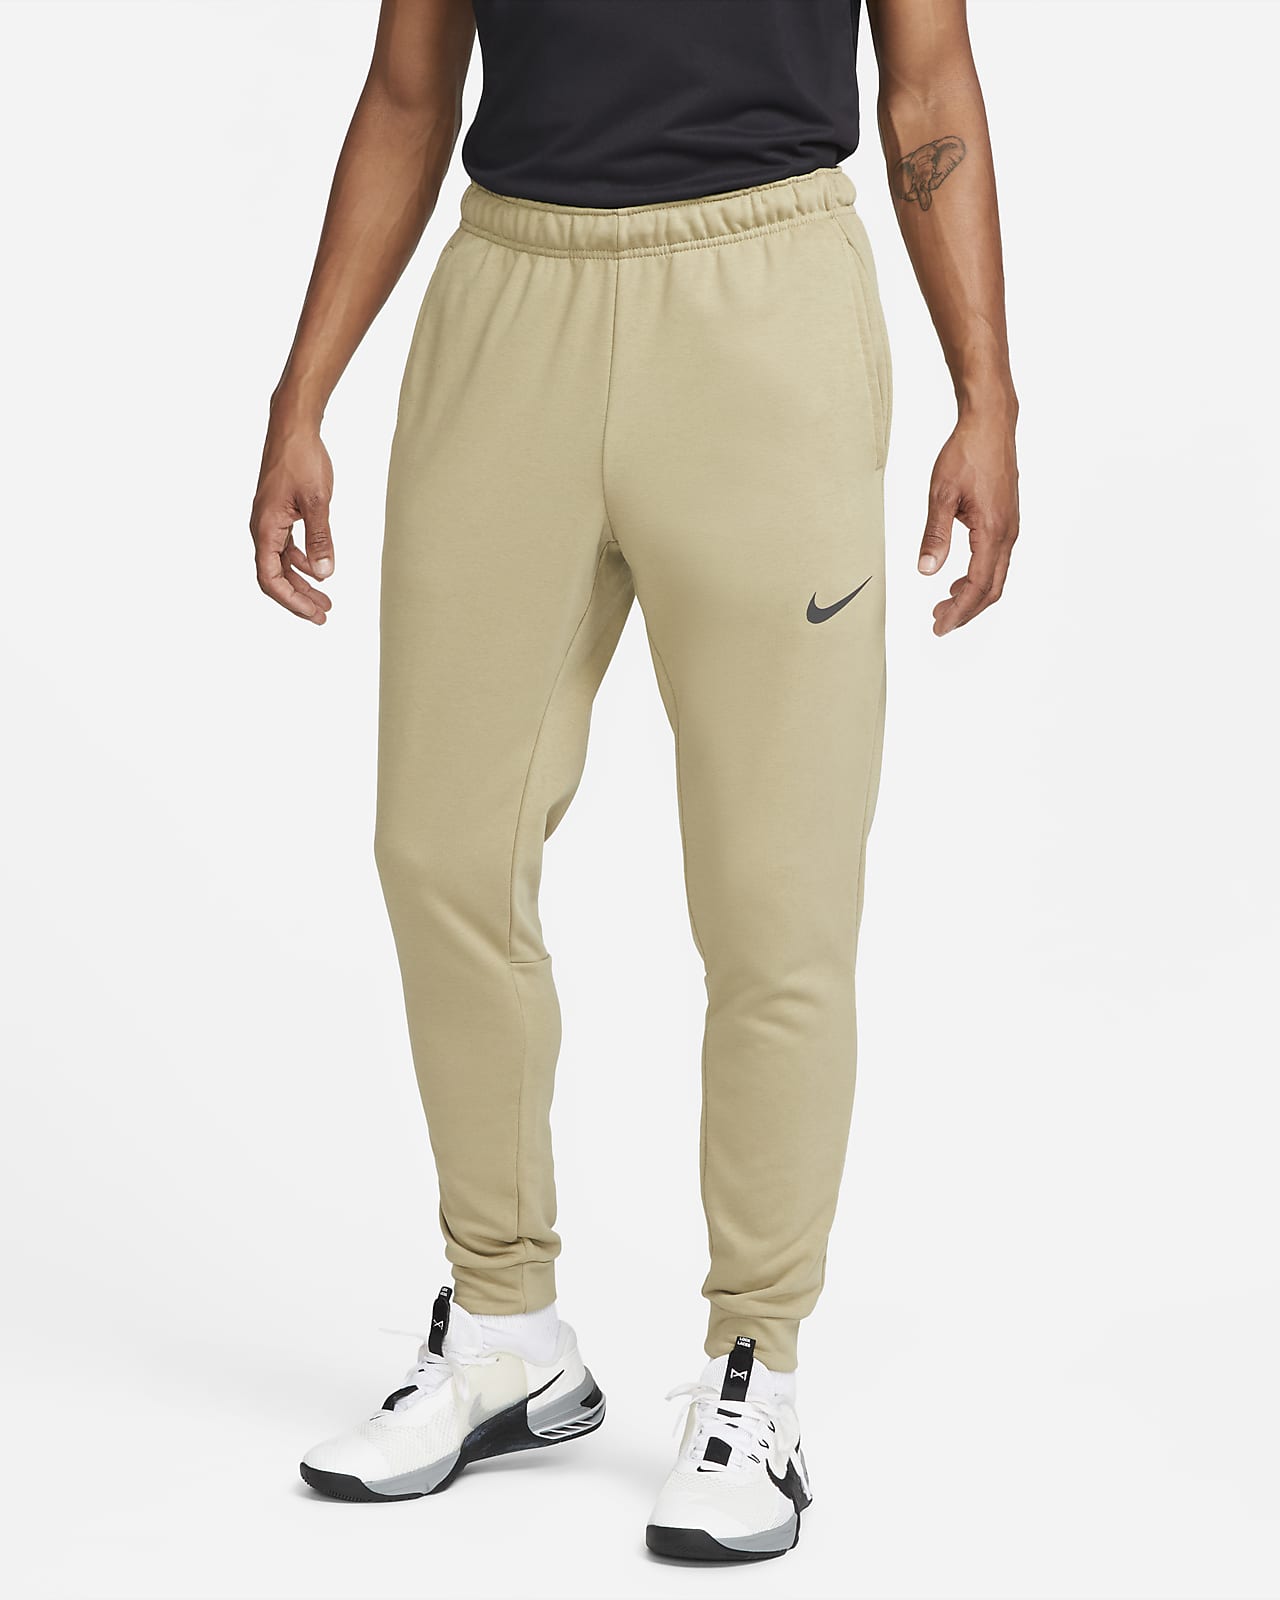 Nike  DriFIT Mens Fleece Training Pants  Closed Hem Fleece Jogging  Bottoms  SportsDirectcom